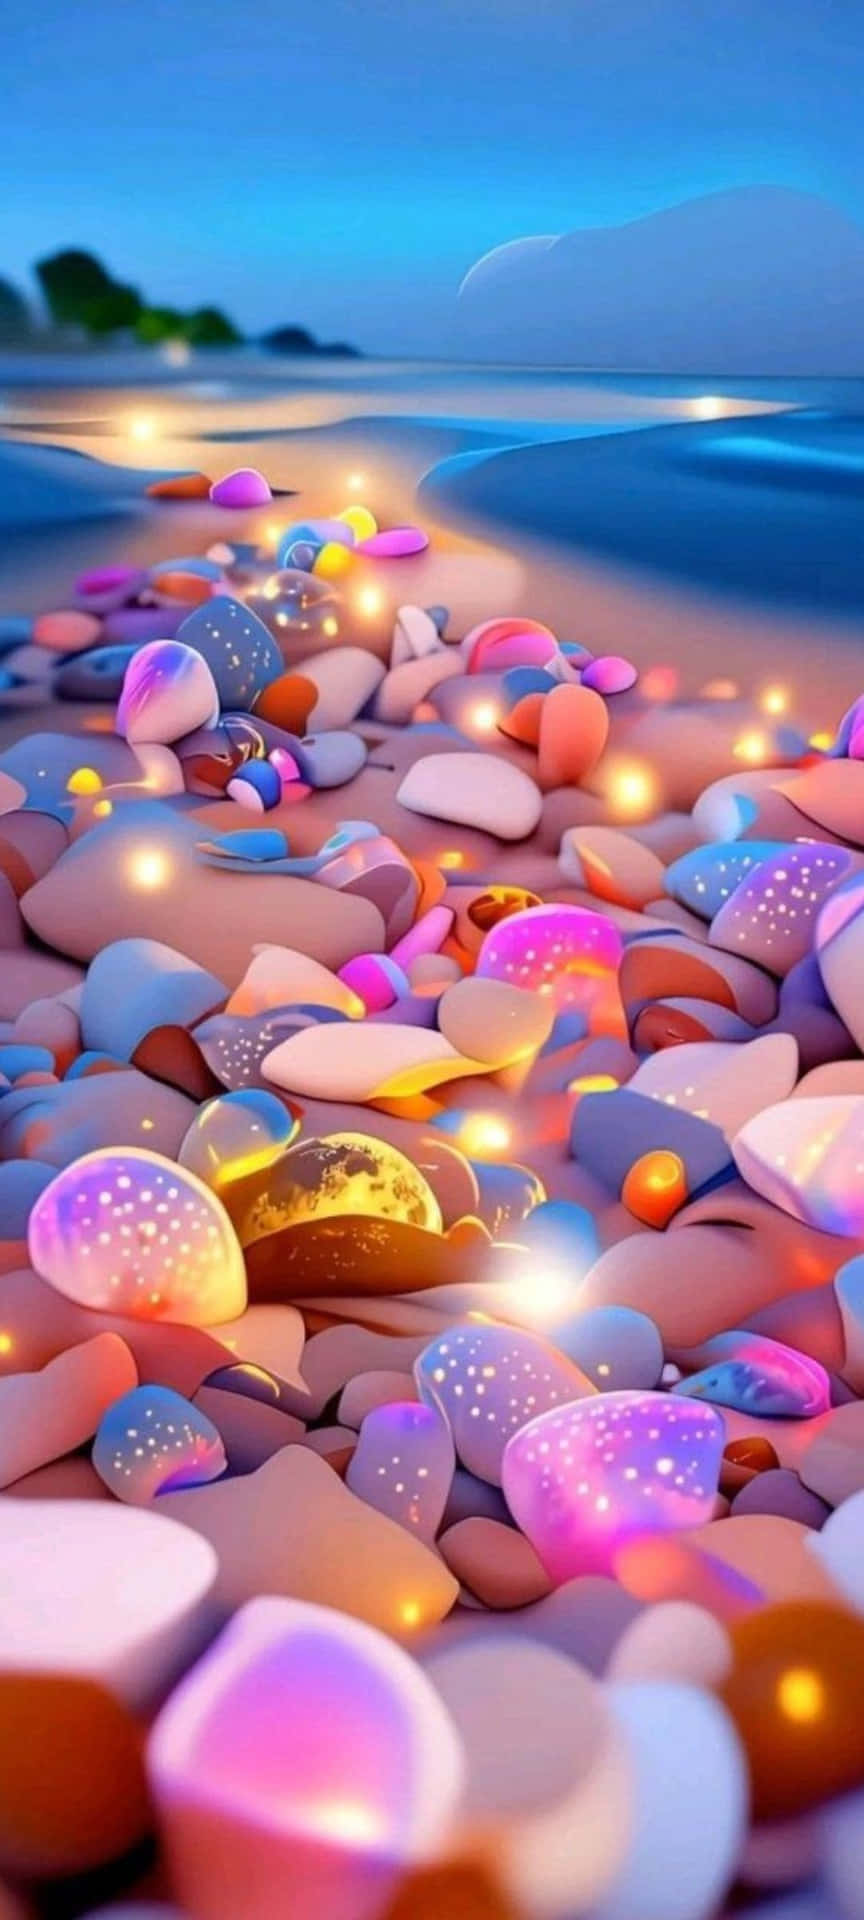 Enchanted Glowing Stones Beach Night Wallpaper